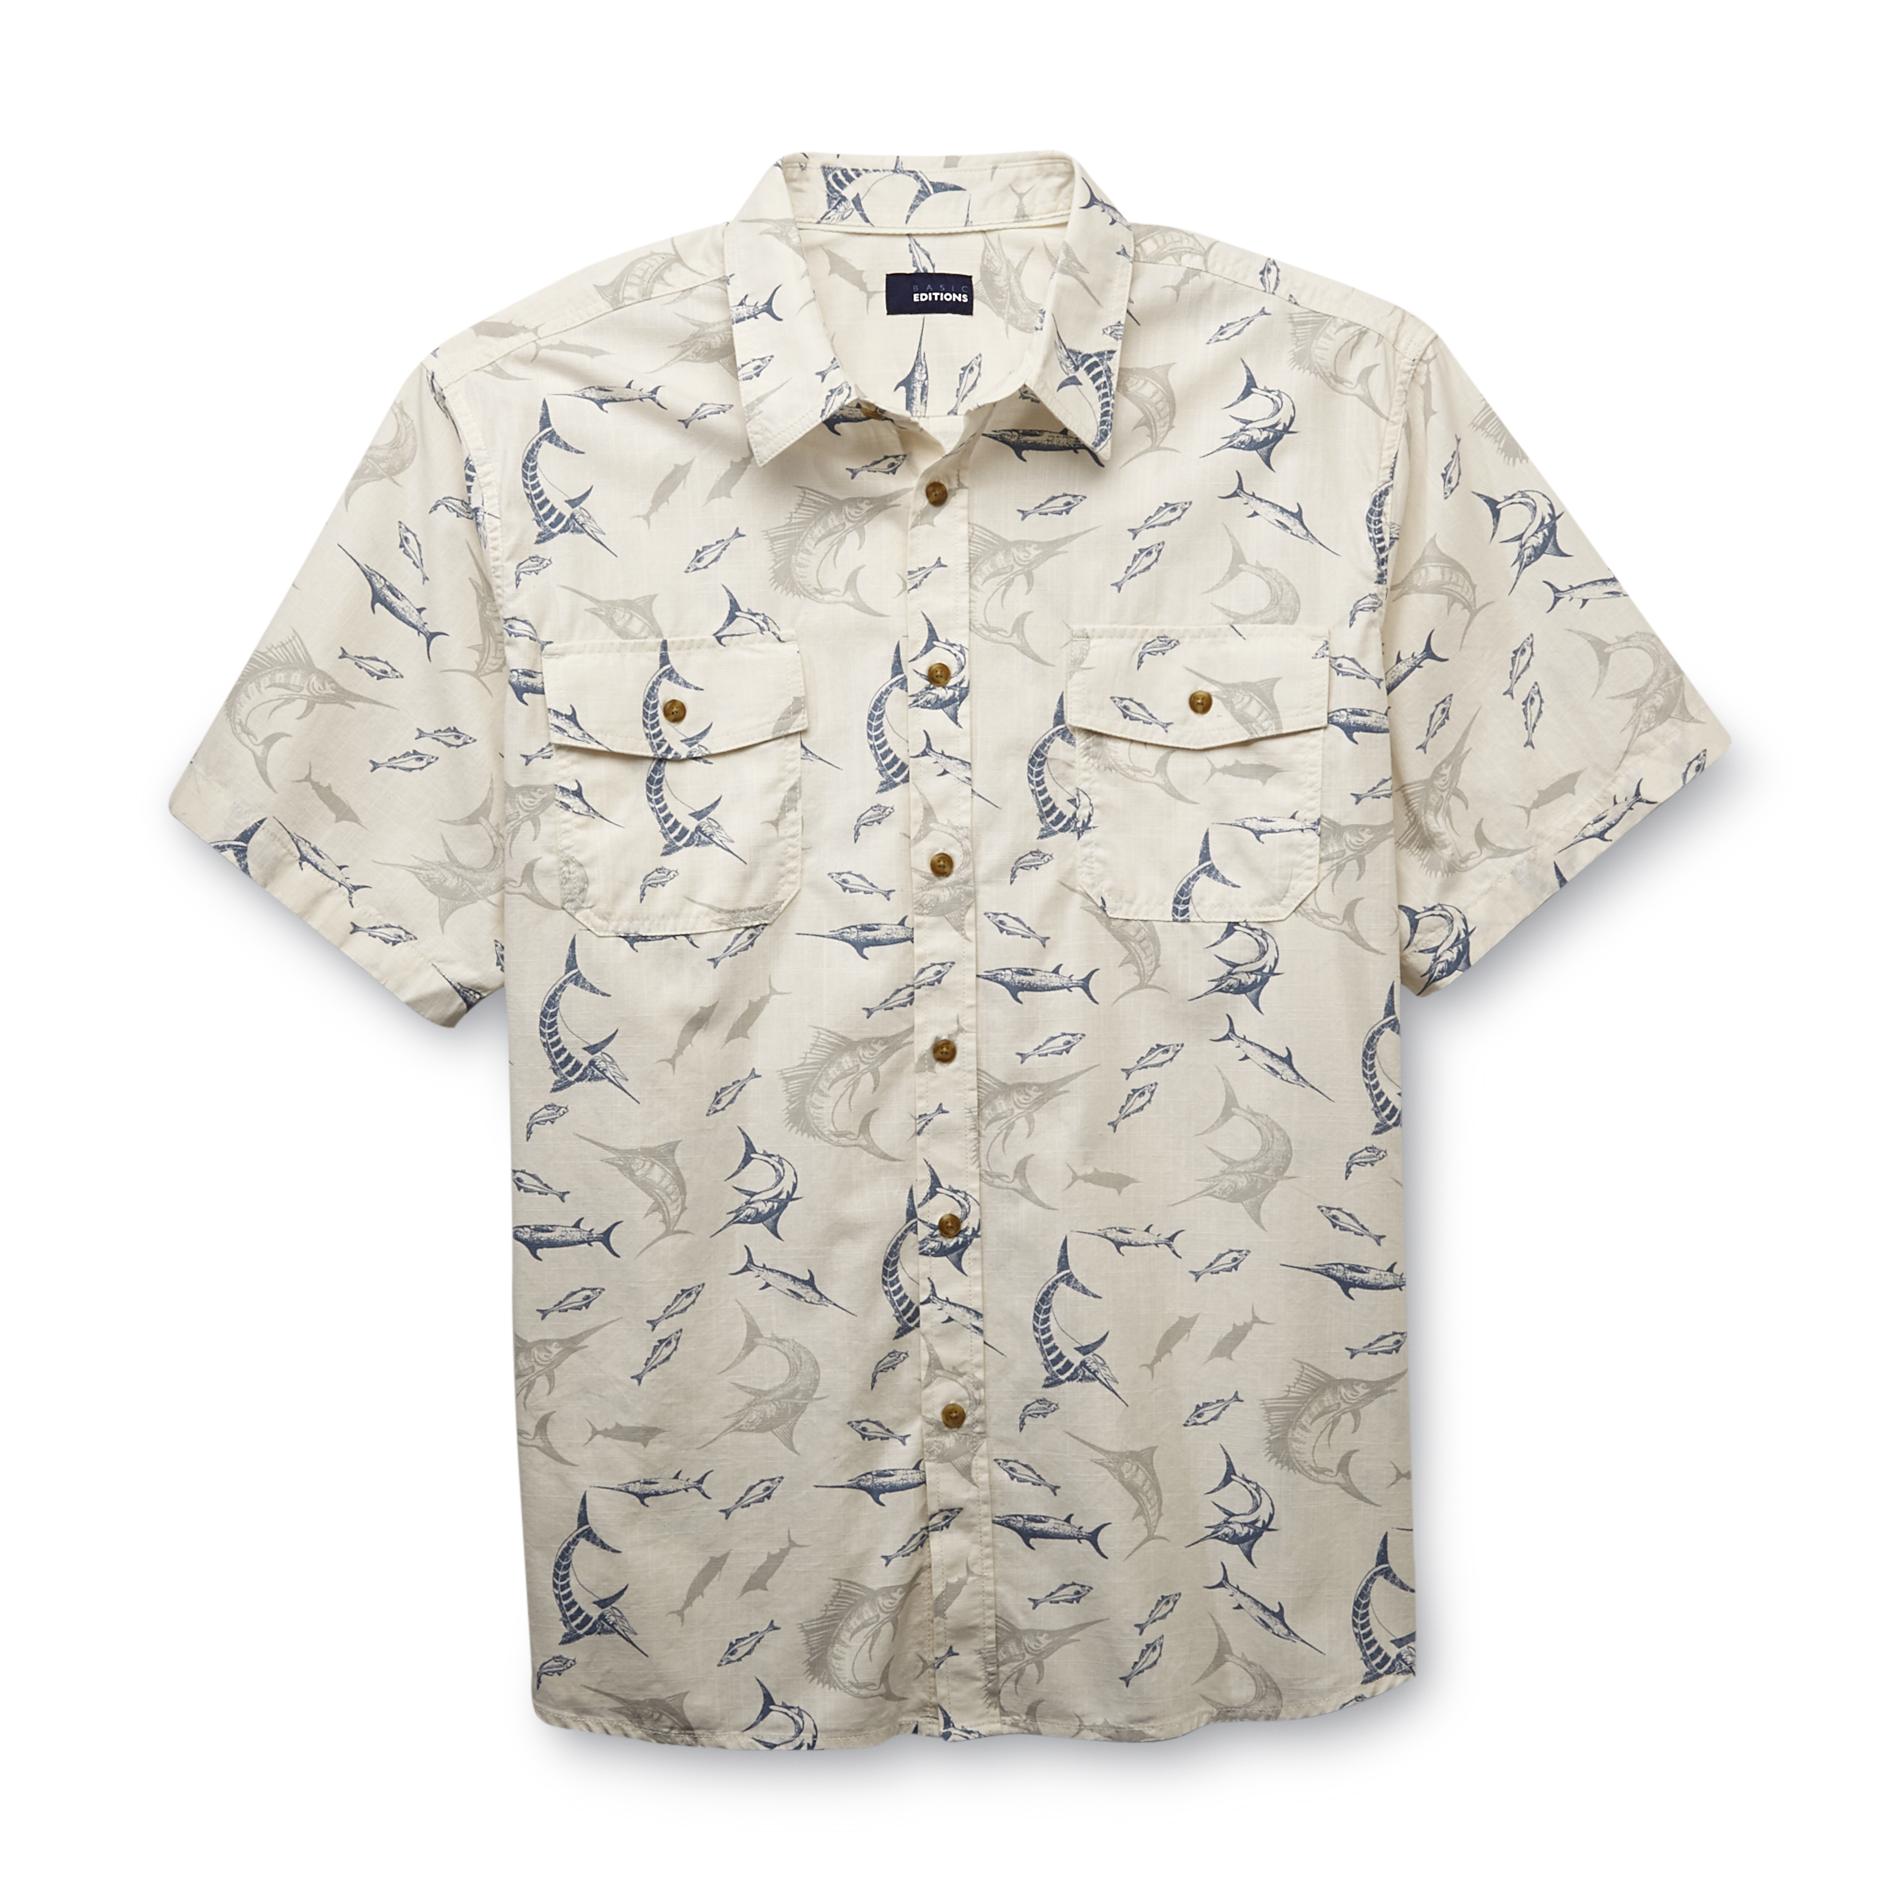 Basic Editions Men's Short-Sleeve Woven Shirt - Swordfish